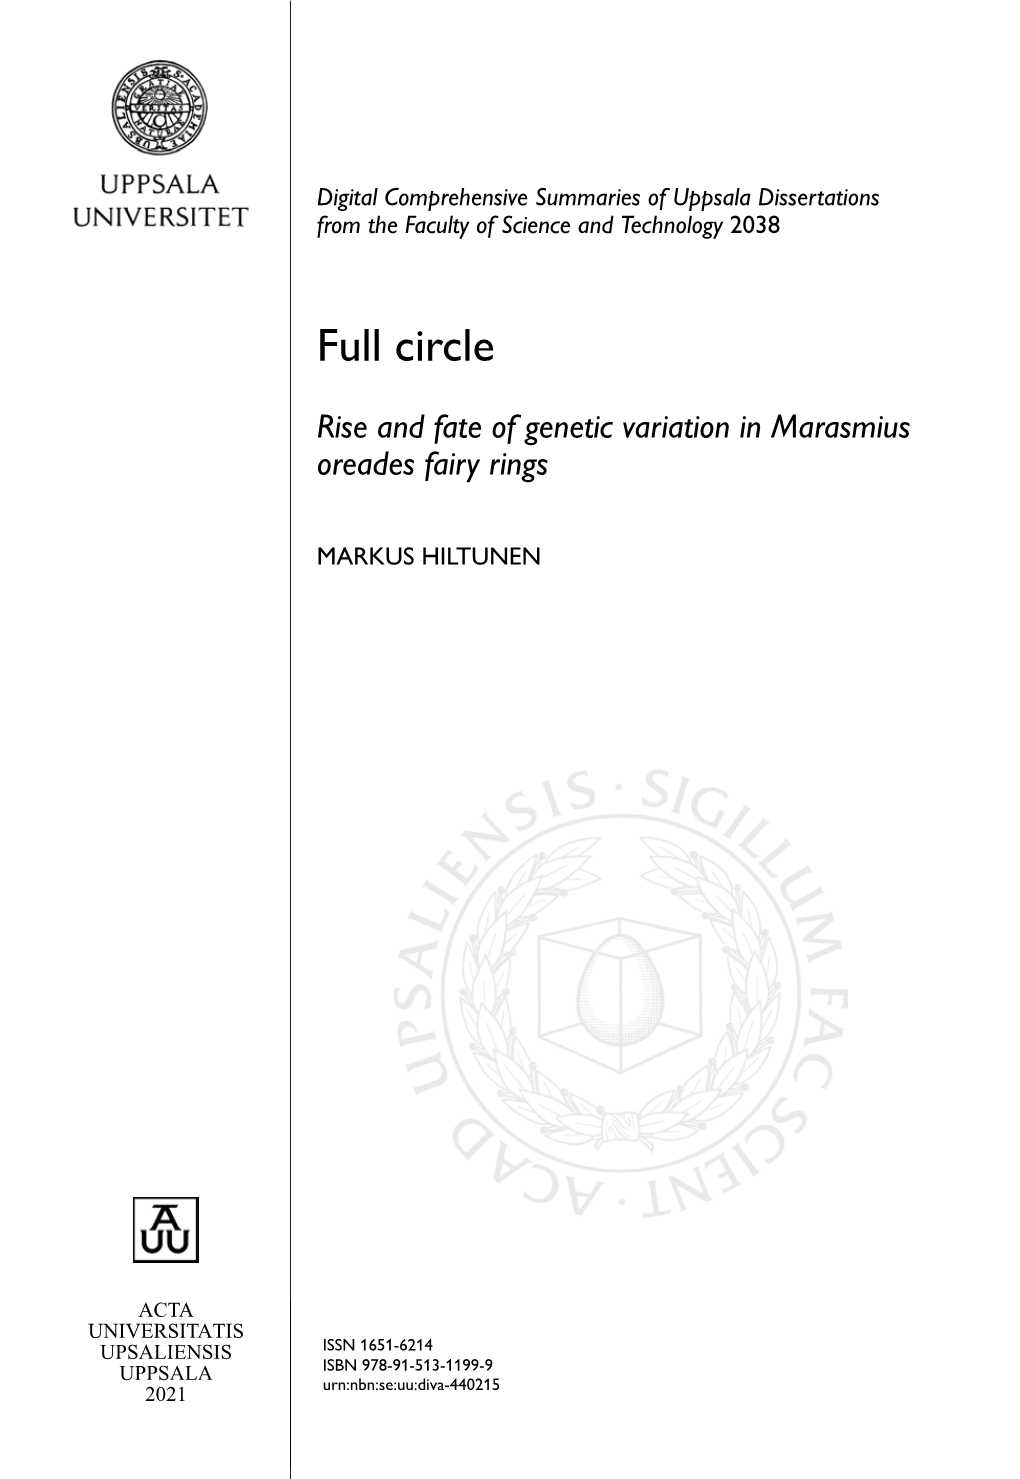 Full Circle. Rise and Fate of Genetic Variation in Marasmius Oreades Fairy Rings